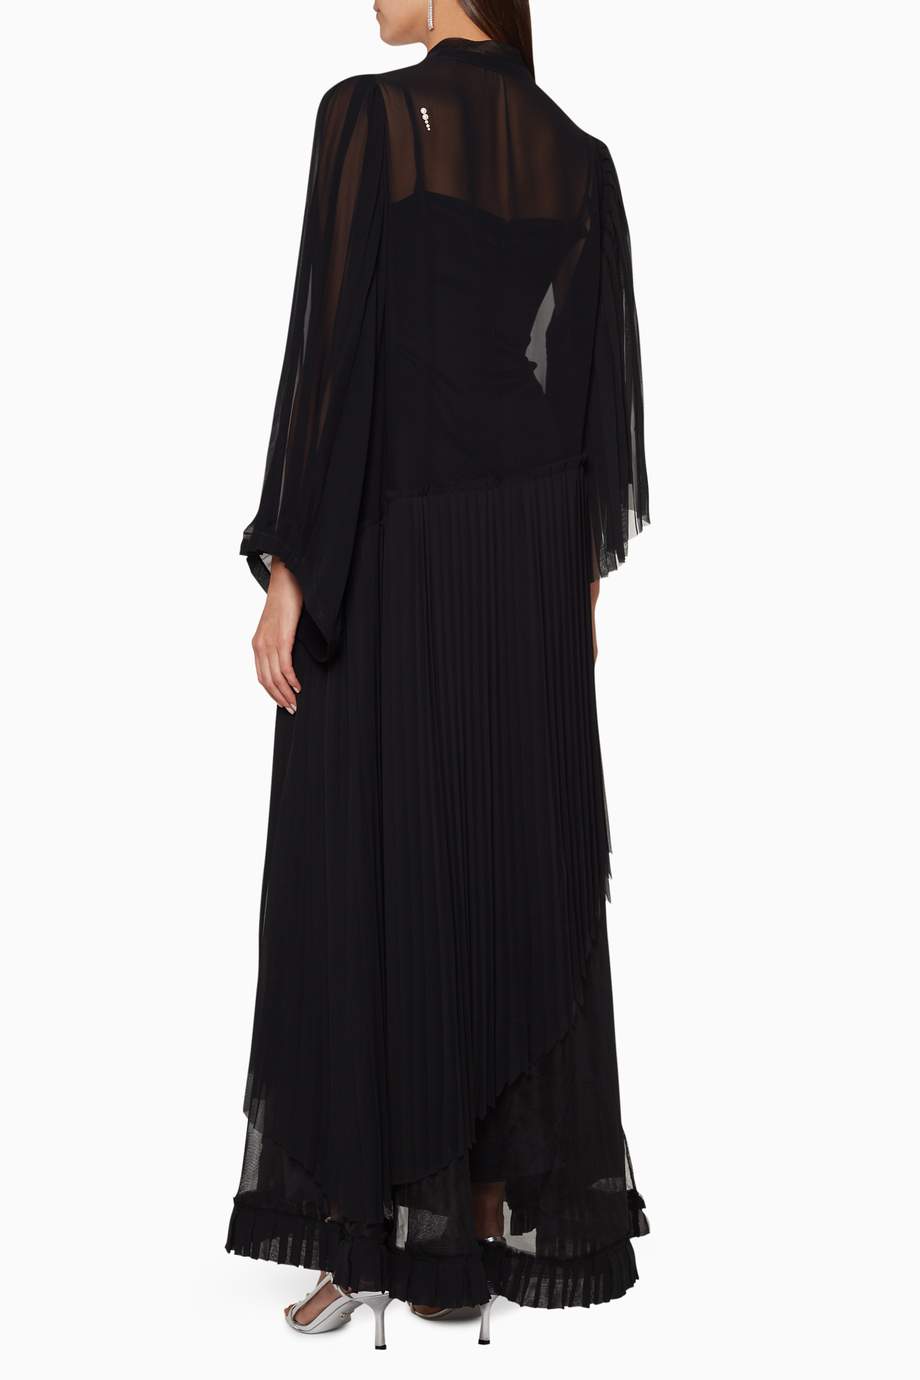 Shop Pearl Haute Couture Black Chiffon Plisse Pleat Abaya for Women ...